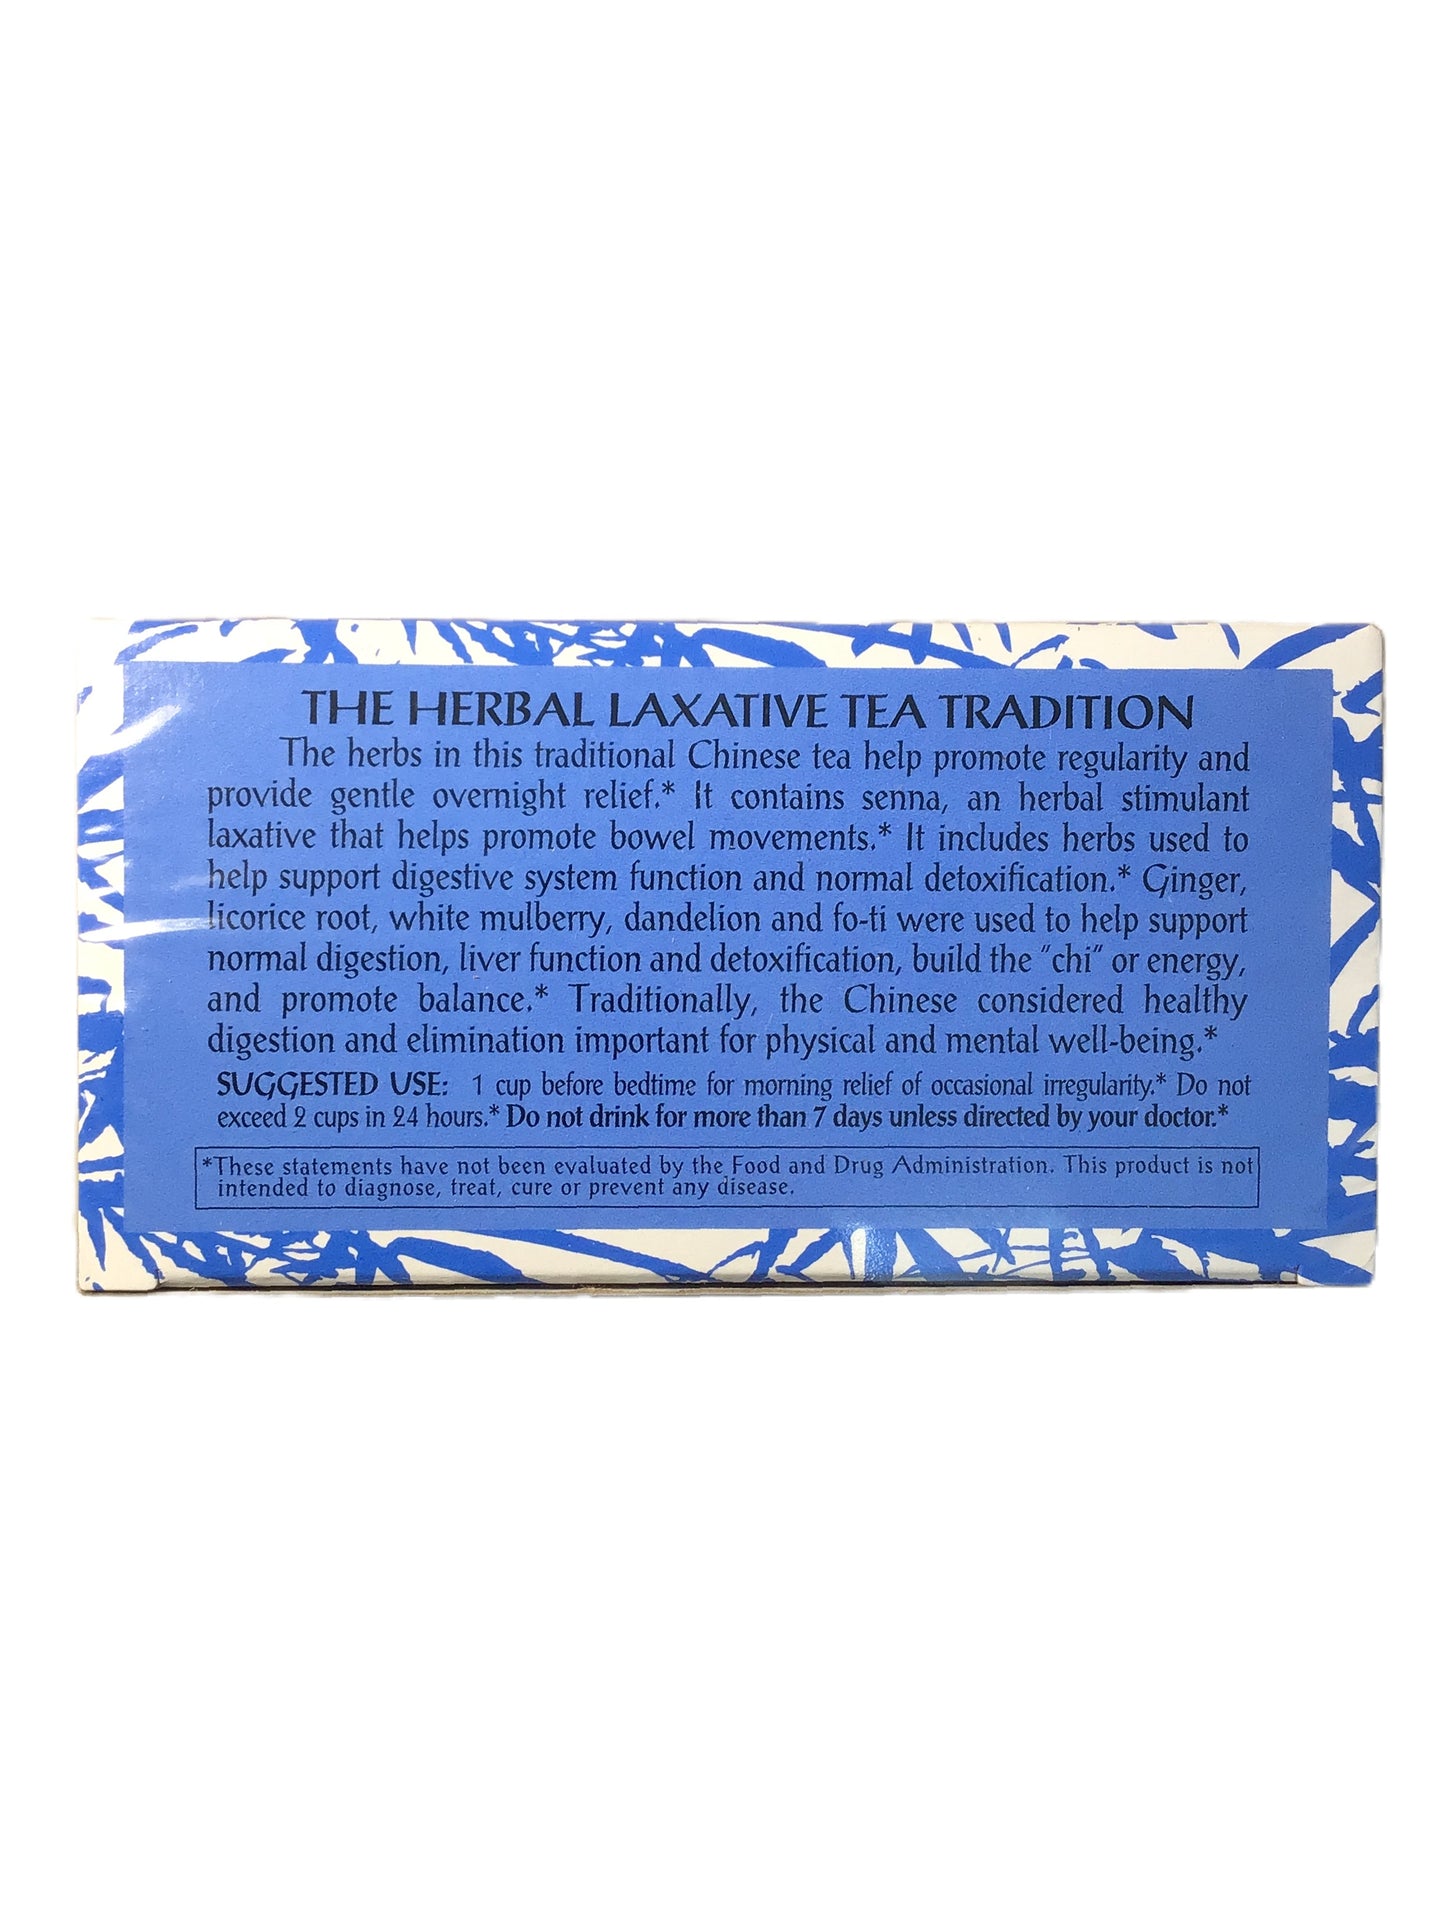 Triple Leaf Brand Herbal Tea - Herbal Laxative